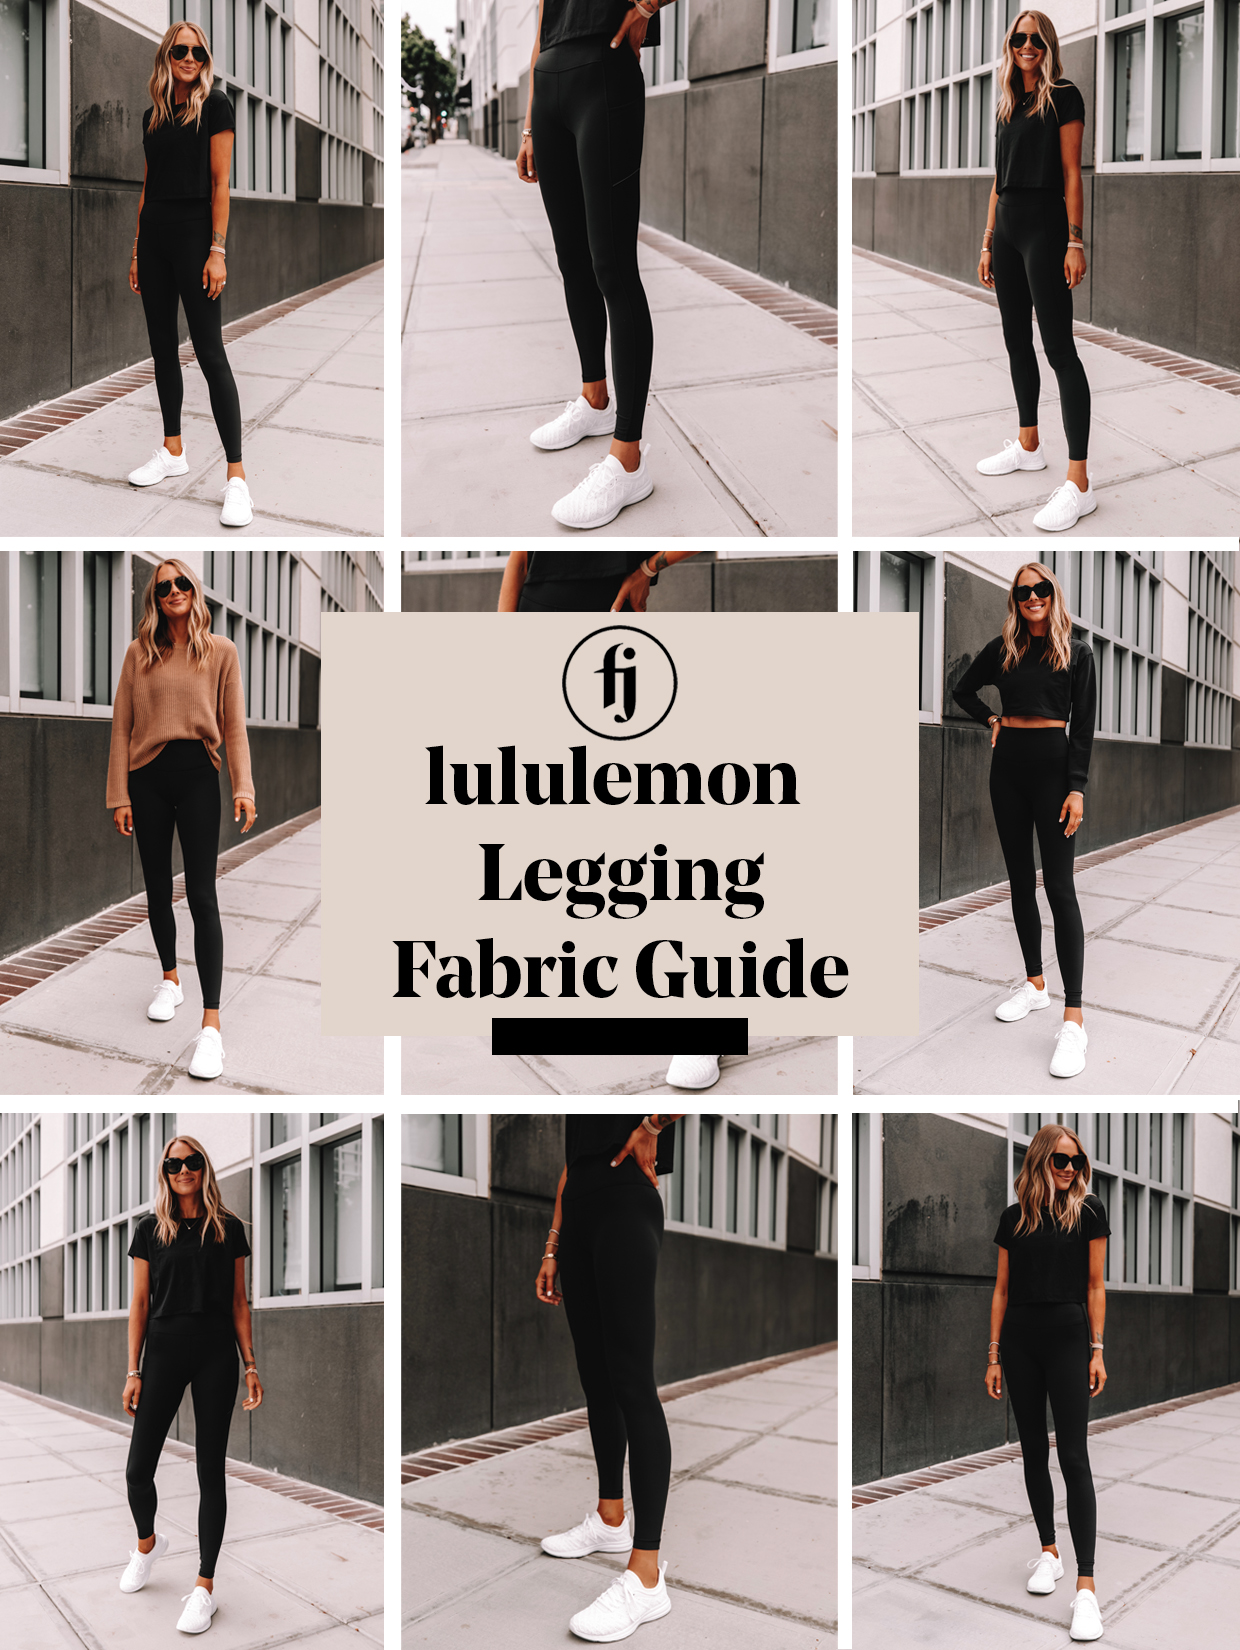 lululemon Fabric Guide [CHEATSHEET] - Schimiggy Reviews